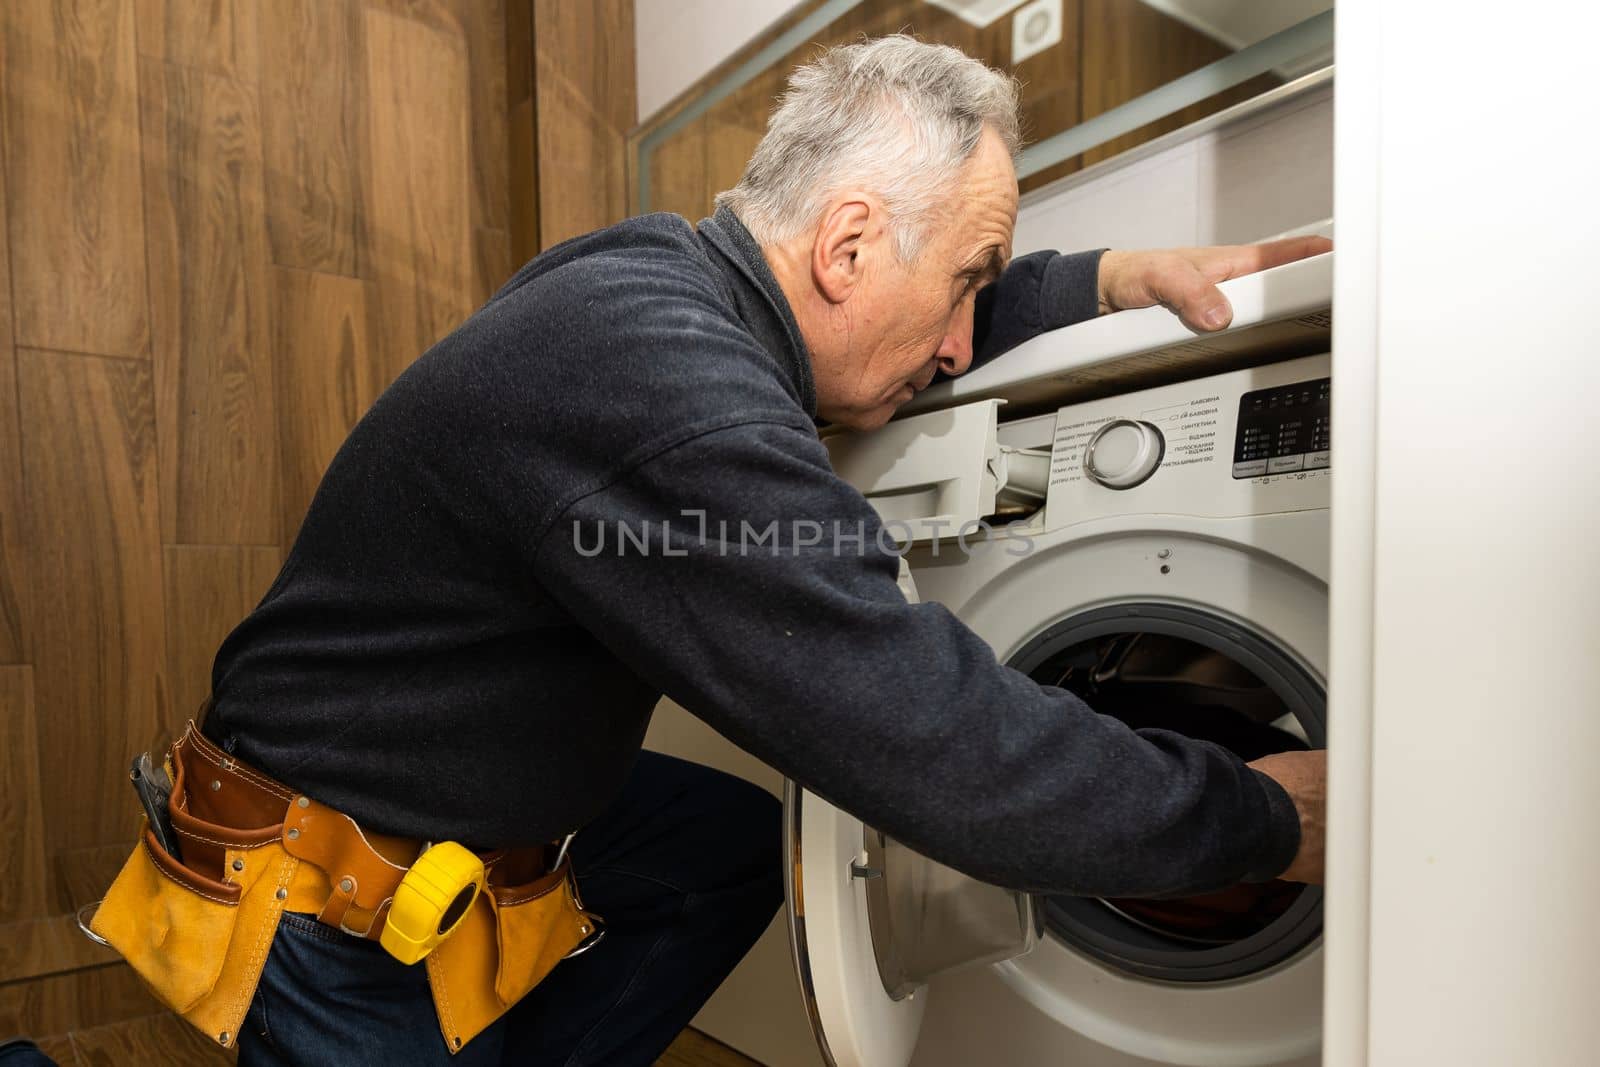 an elderly man repairs a washing machine.